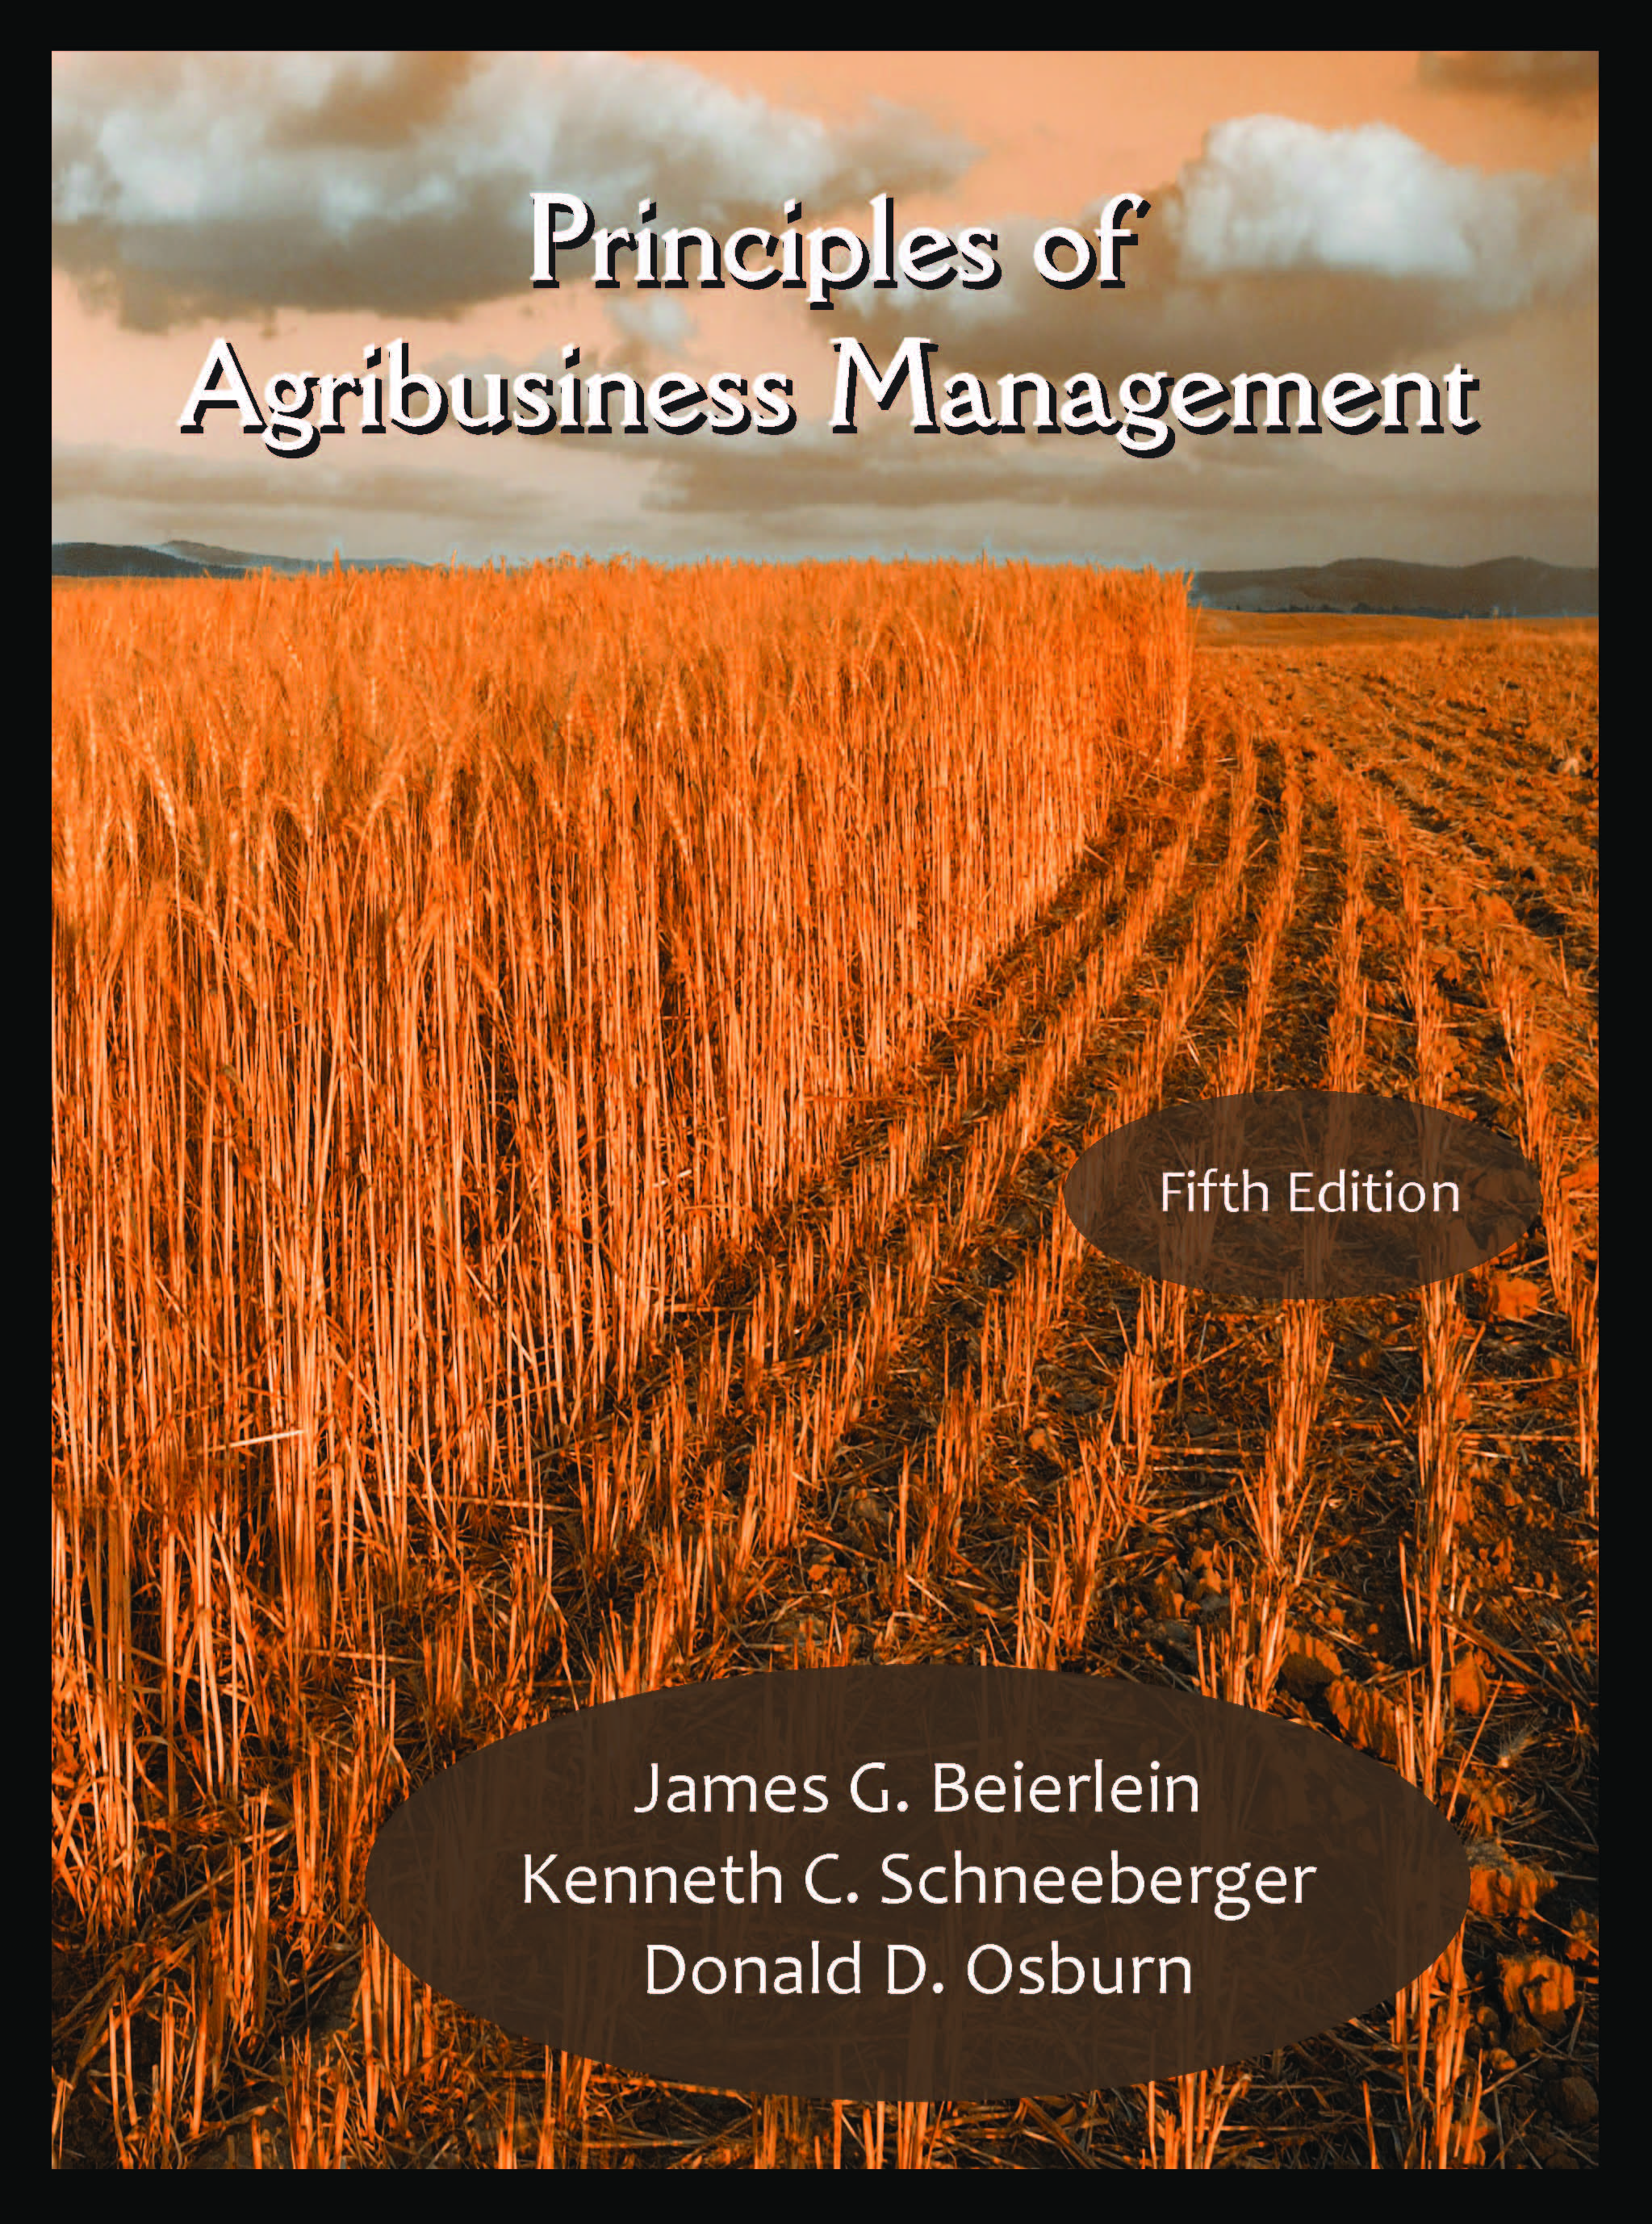 Principles of Agribusiness Management:  by James G. Beierlein, Kenneth C. Schneeberger, Donald D. Osburn